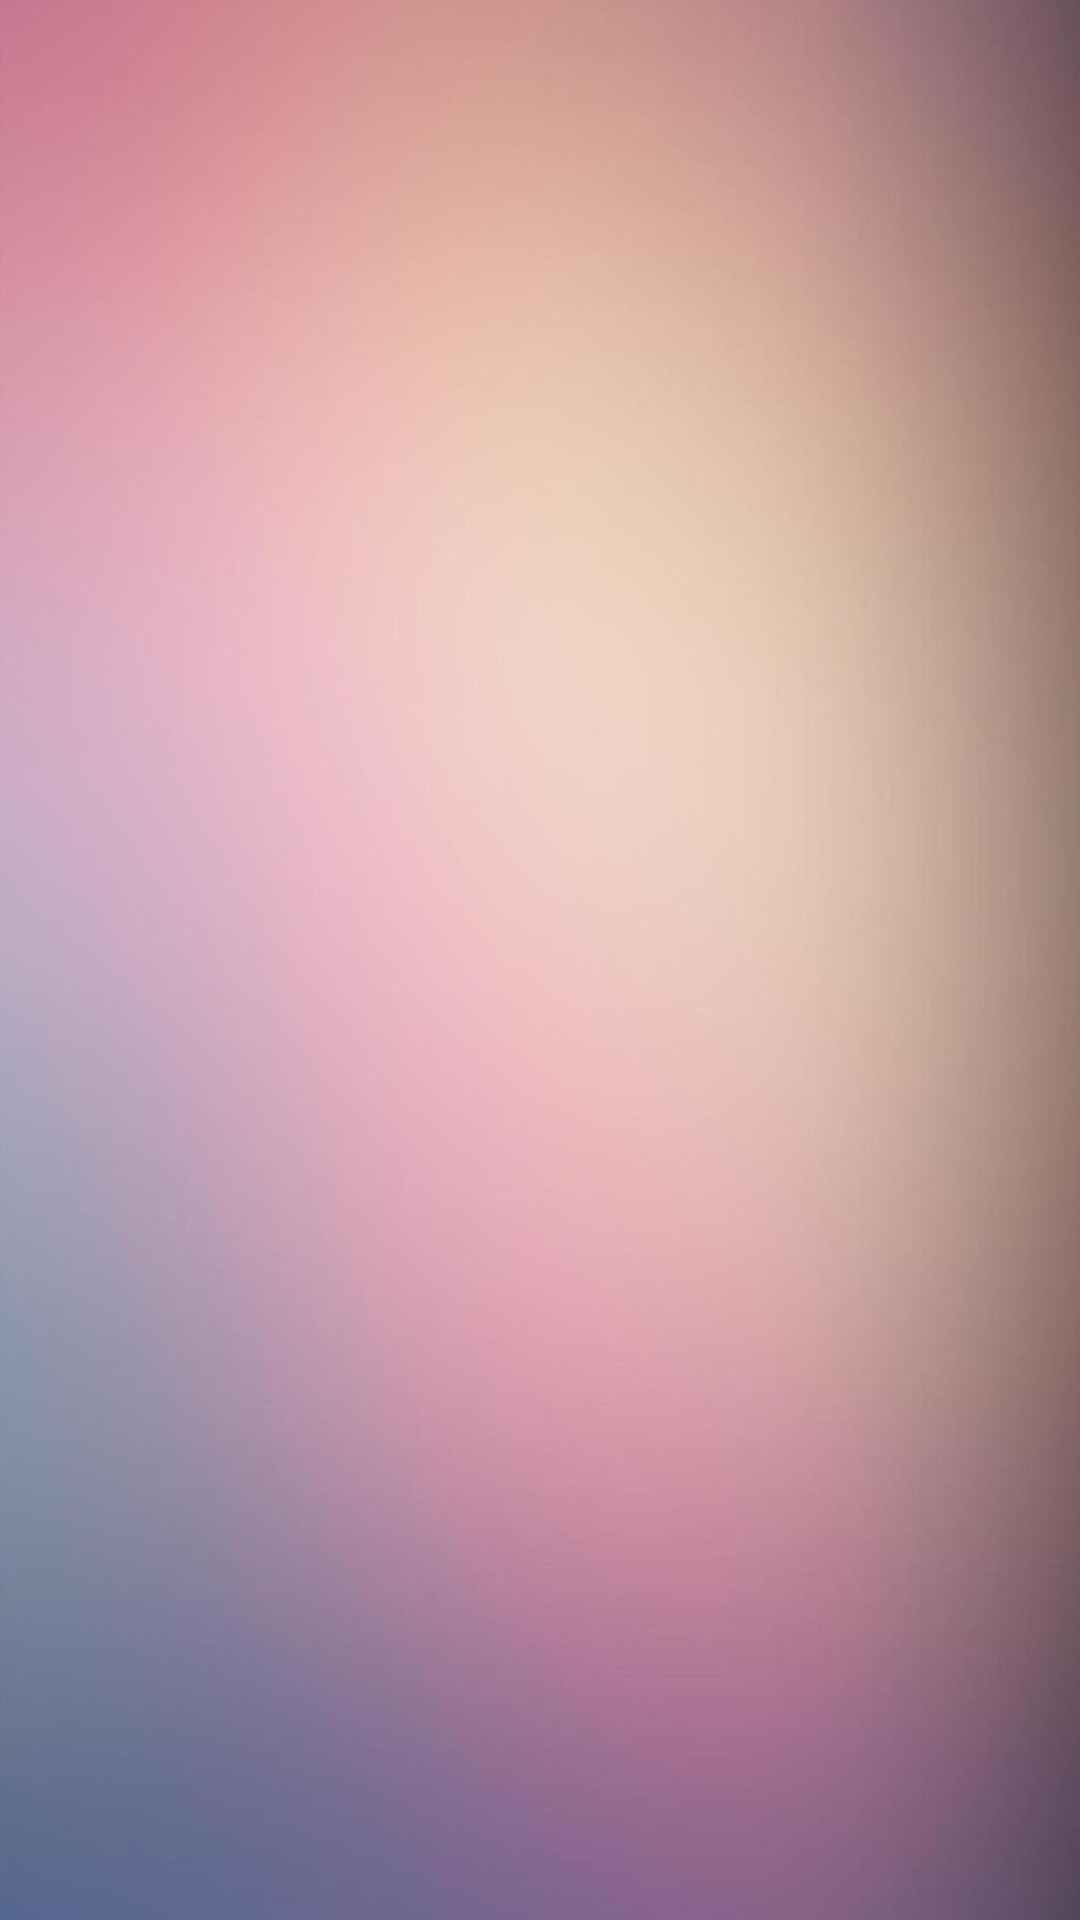 Simple Background Nexus 5 Wallpapers HD 119 Nexus 5 wallpapers and 1080x1920